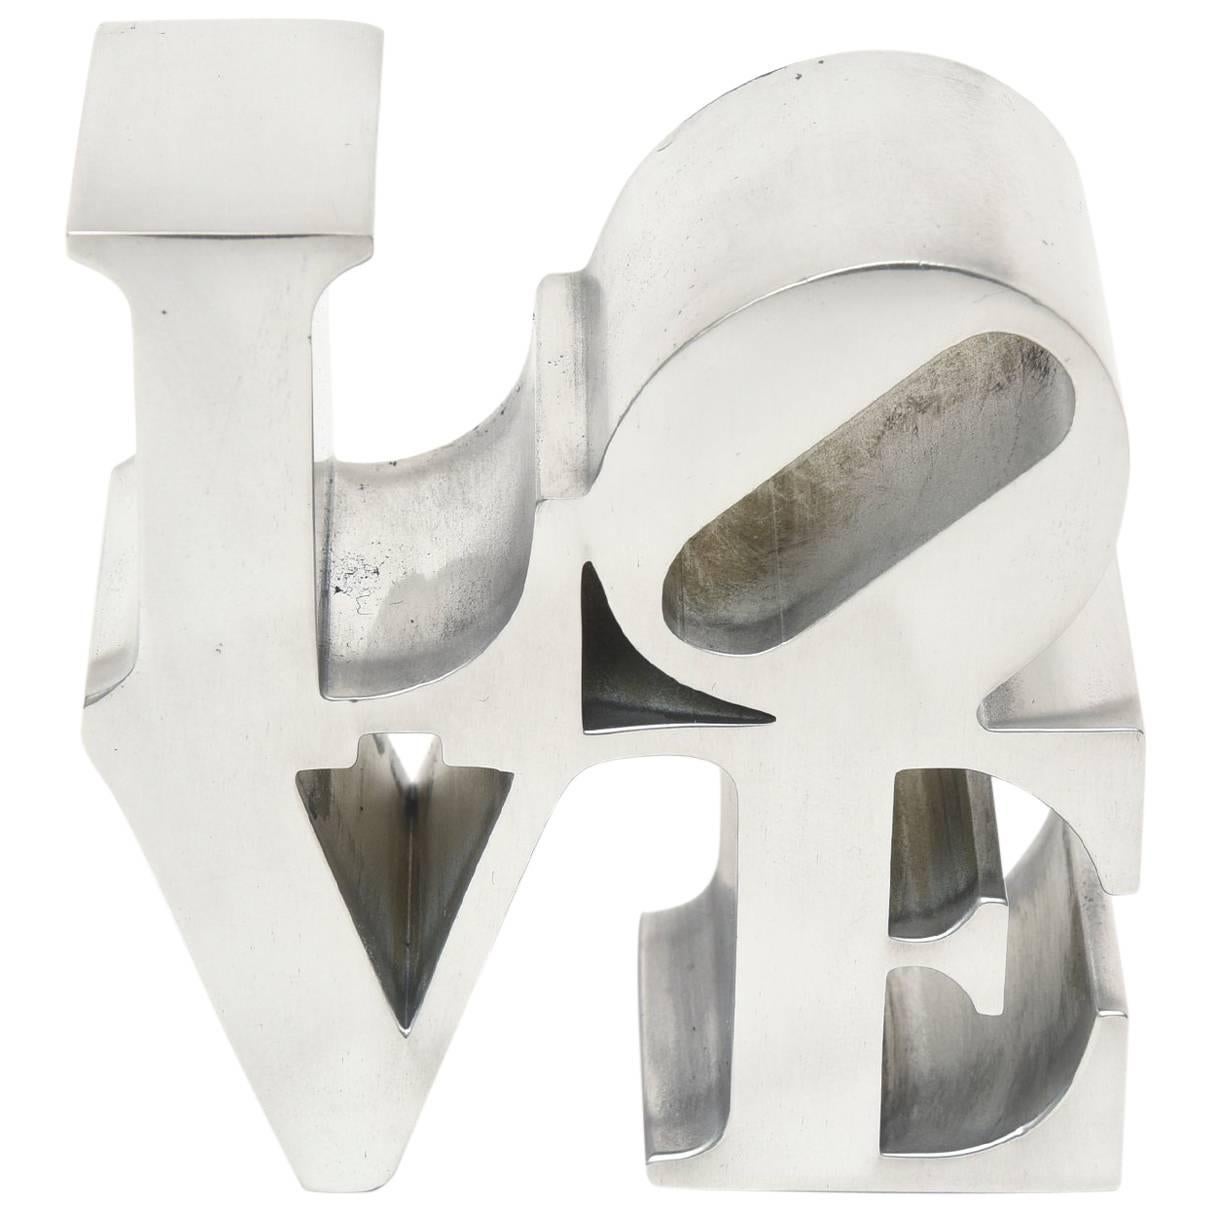 Robert Indiana 'Love" Paperweight or Sculpture